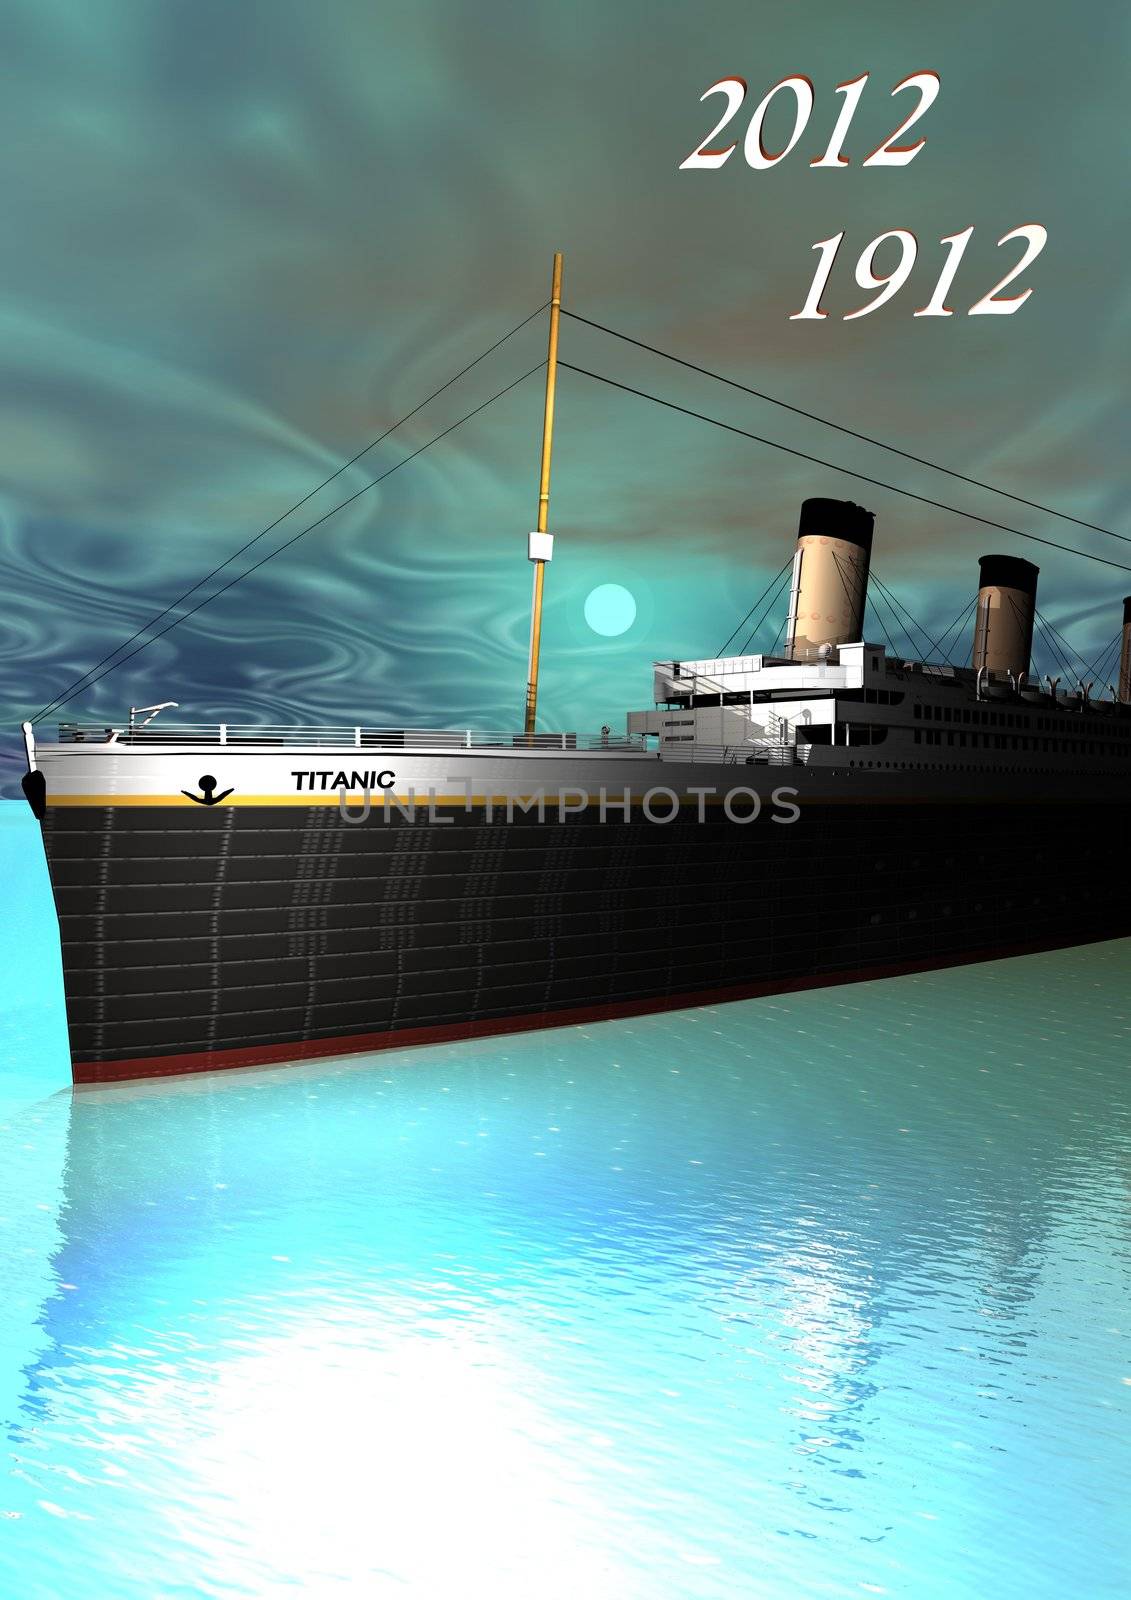 Titanic 1912 - 2012 and sky green